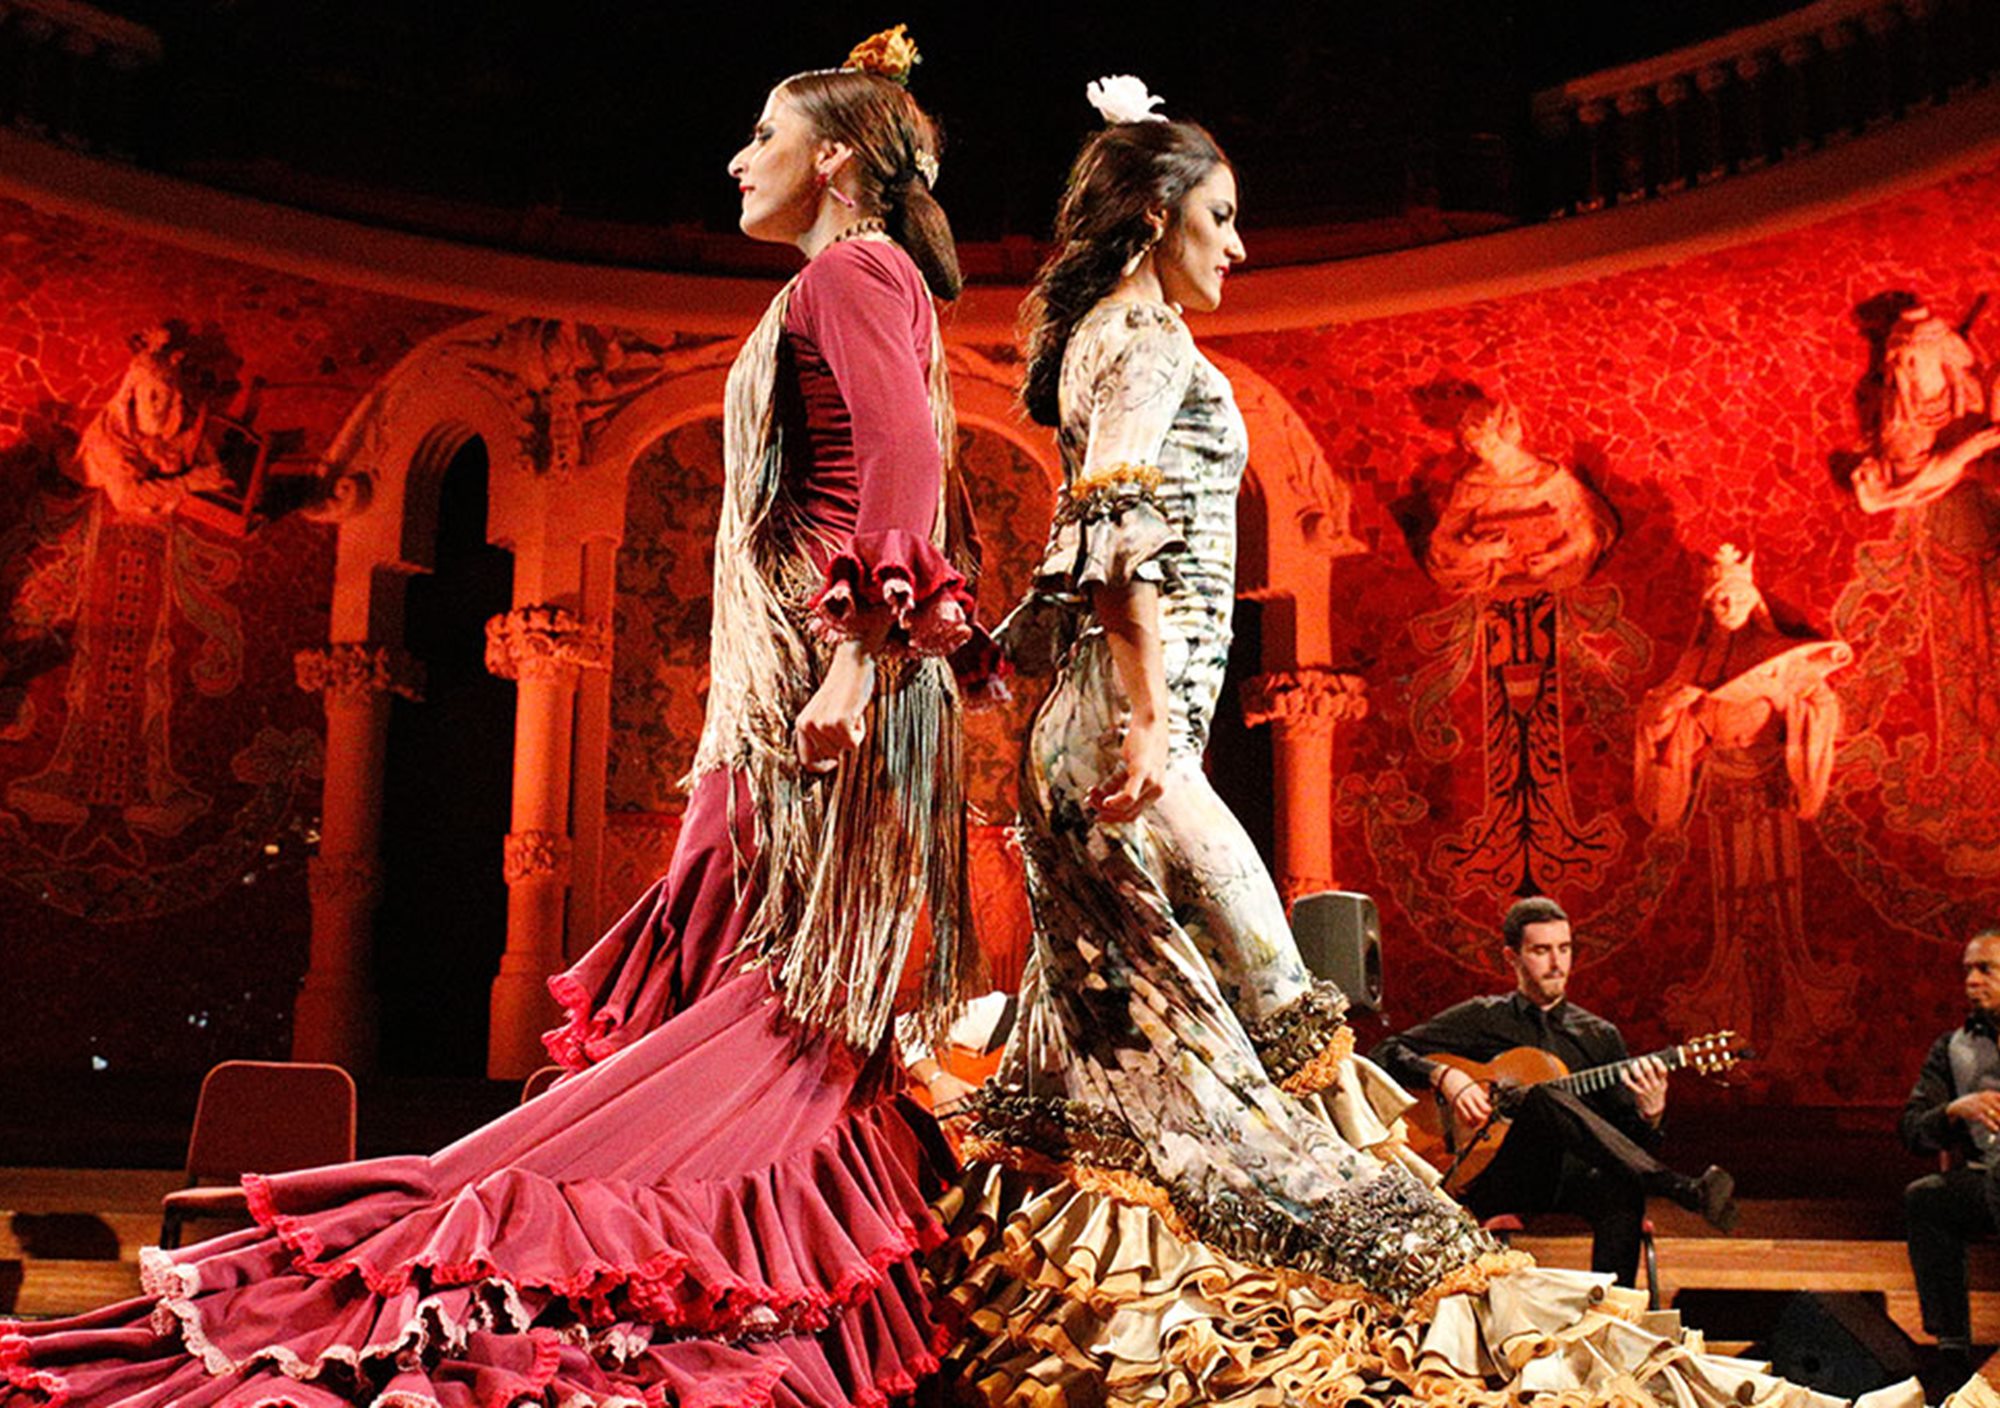 Spectacle Gran Gala Flamenco au Teatre Poliorama barcelone billets reservation acheter réserver en ligne online